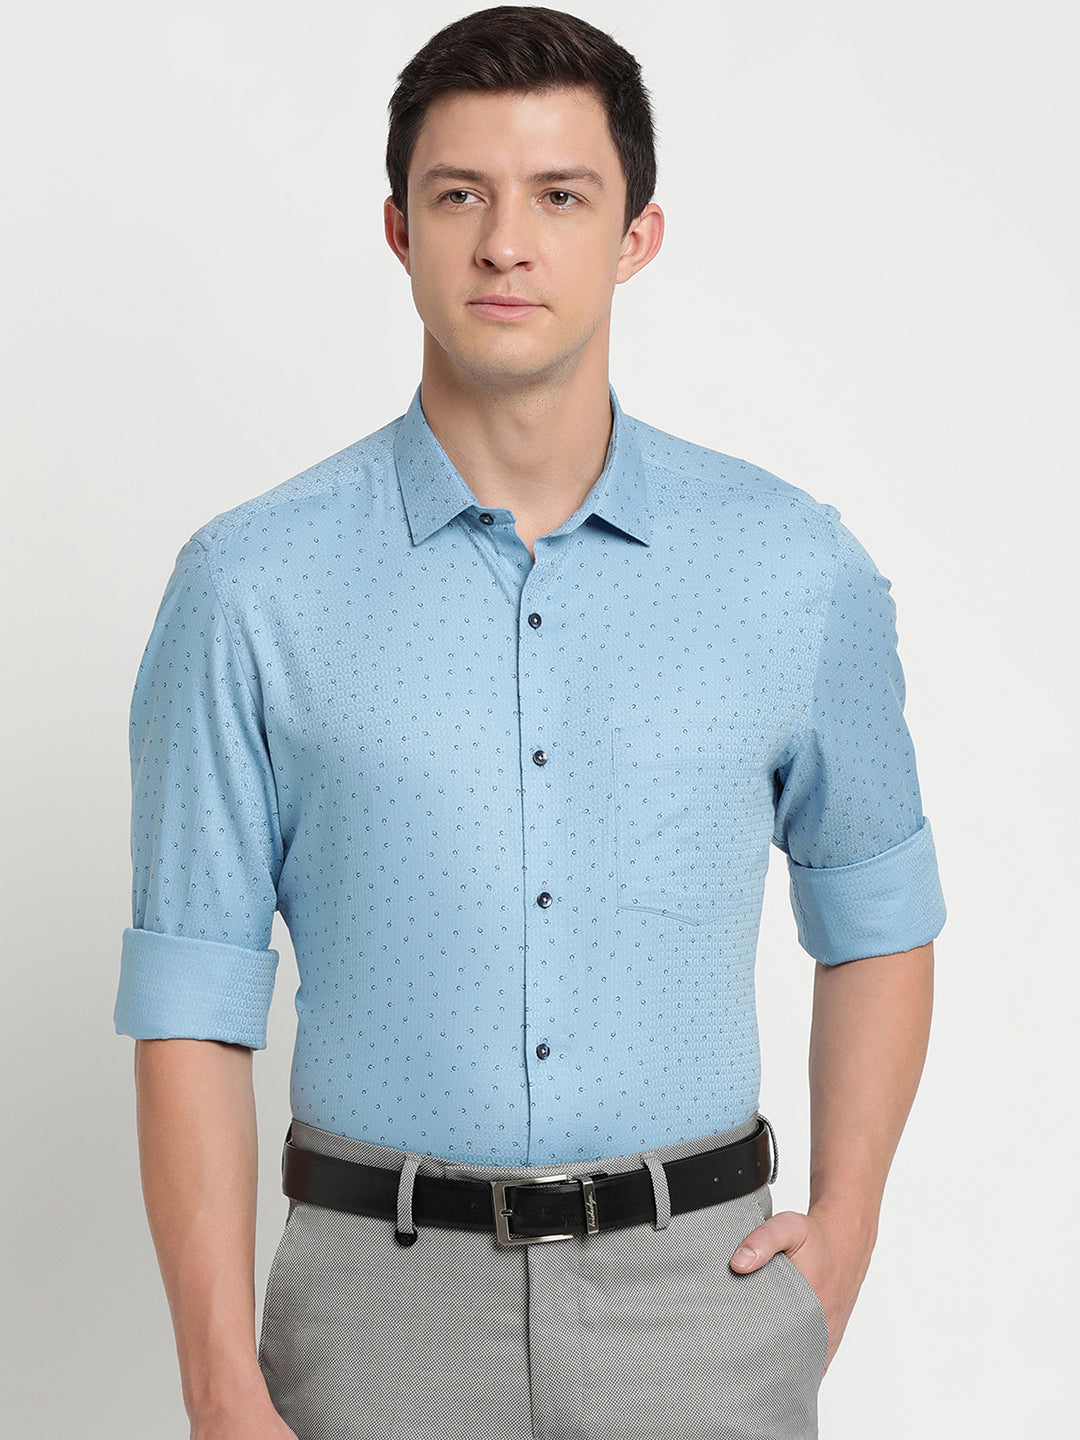 100% Cotton Sky Blue Printed Slim Fit Full Sleeve Formal Shirt